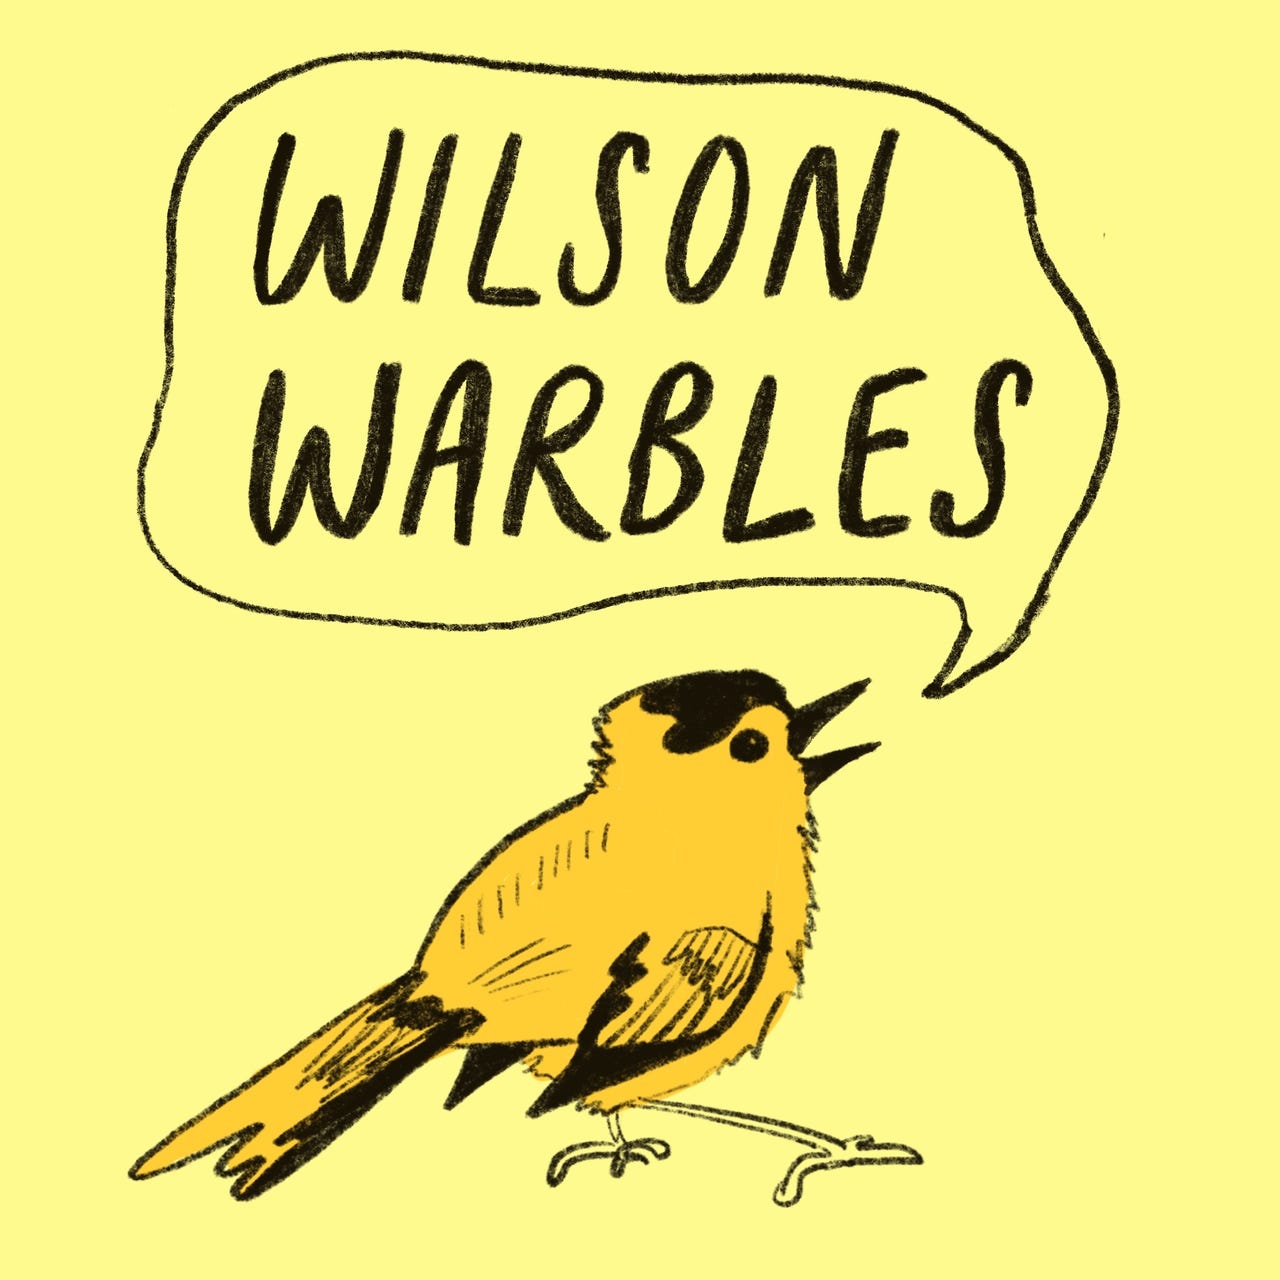 Wilson Warbles